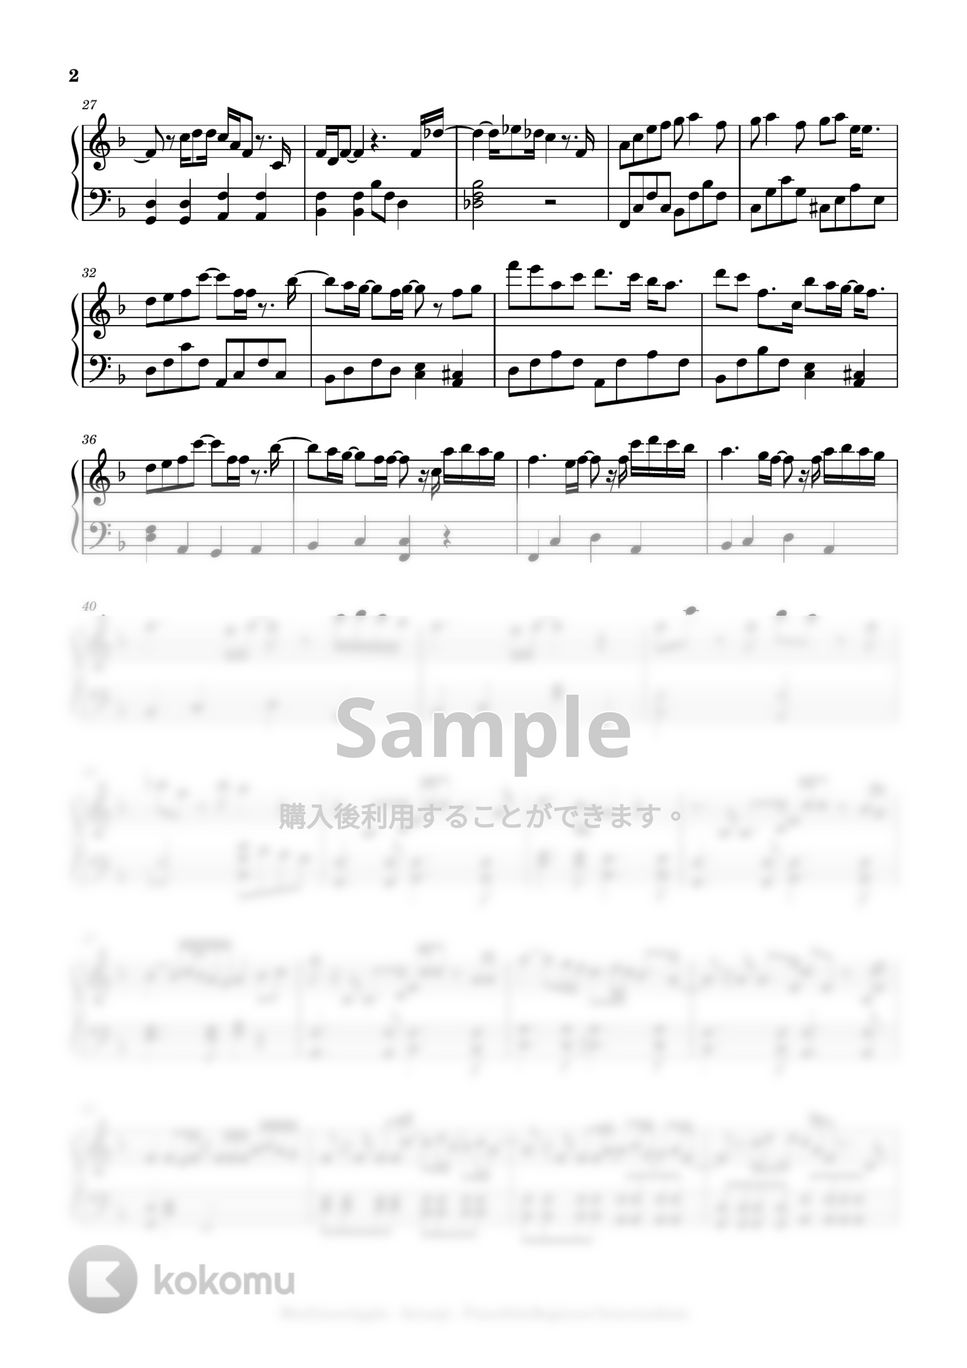 Mrs. GREEN APPLE - Soranji (beginner to intermediate, piano) by Mopianic